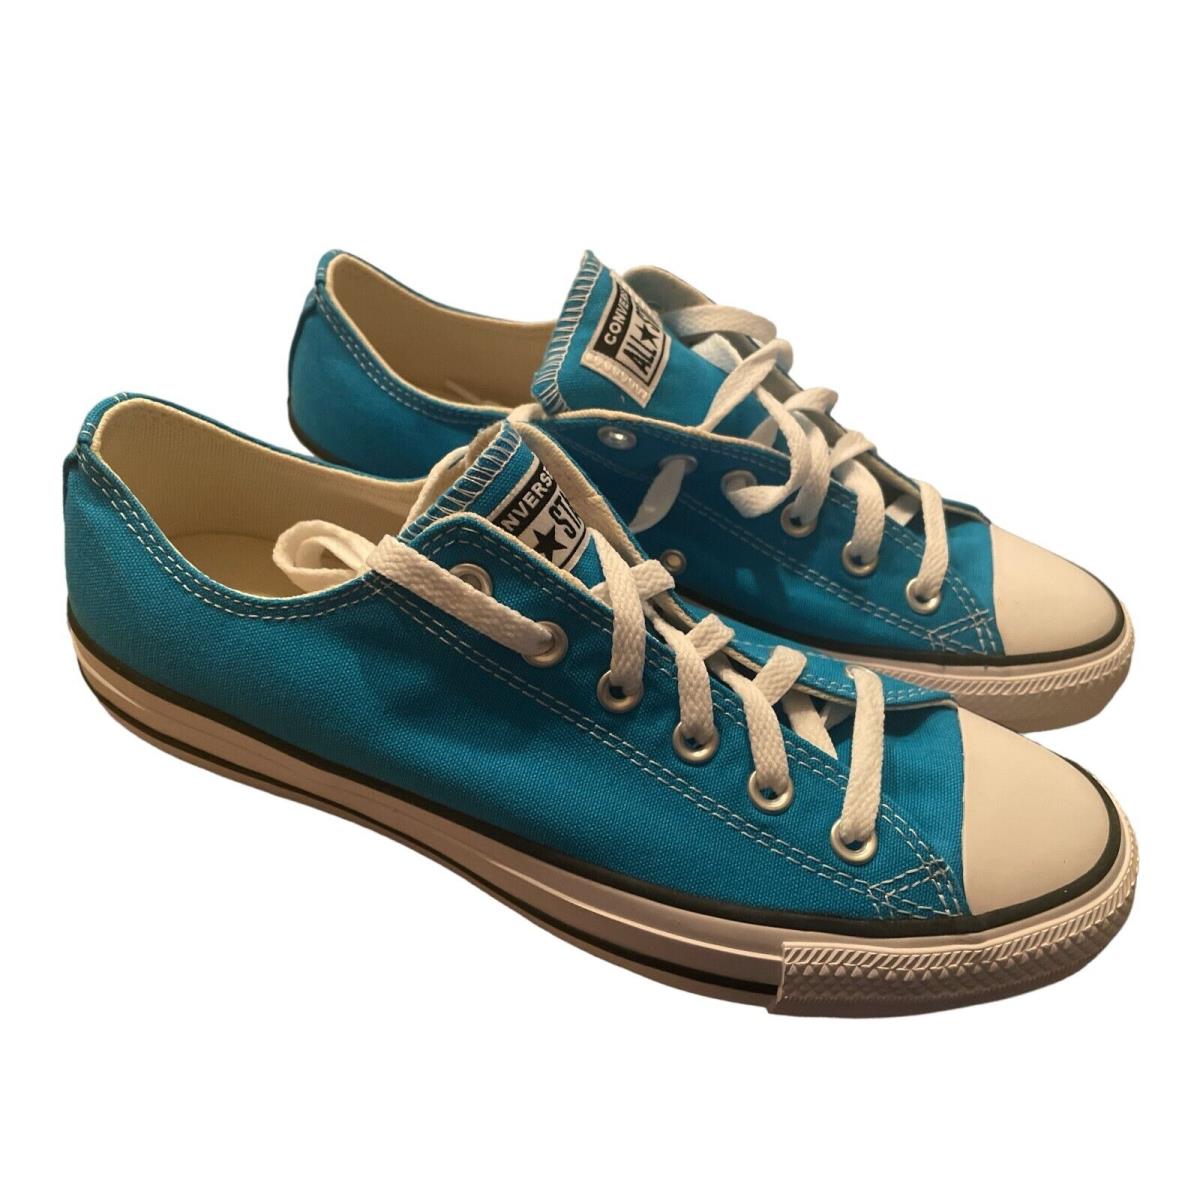 Converse Chuck Taylor All Star OX Sail Blue Shoes 168579F Womens Size 10 Mens 8 - Blue